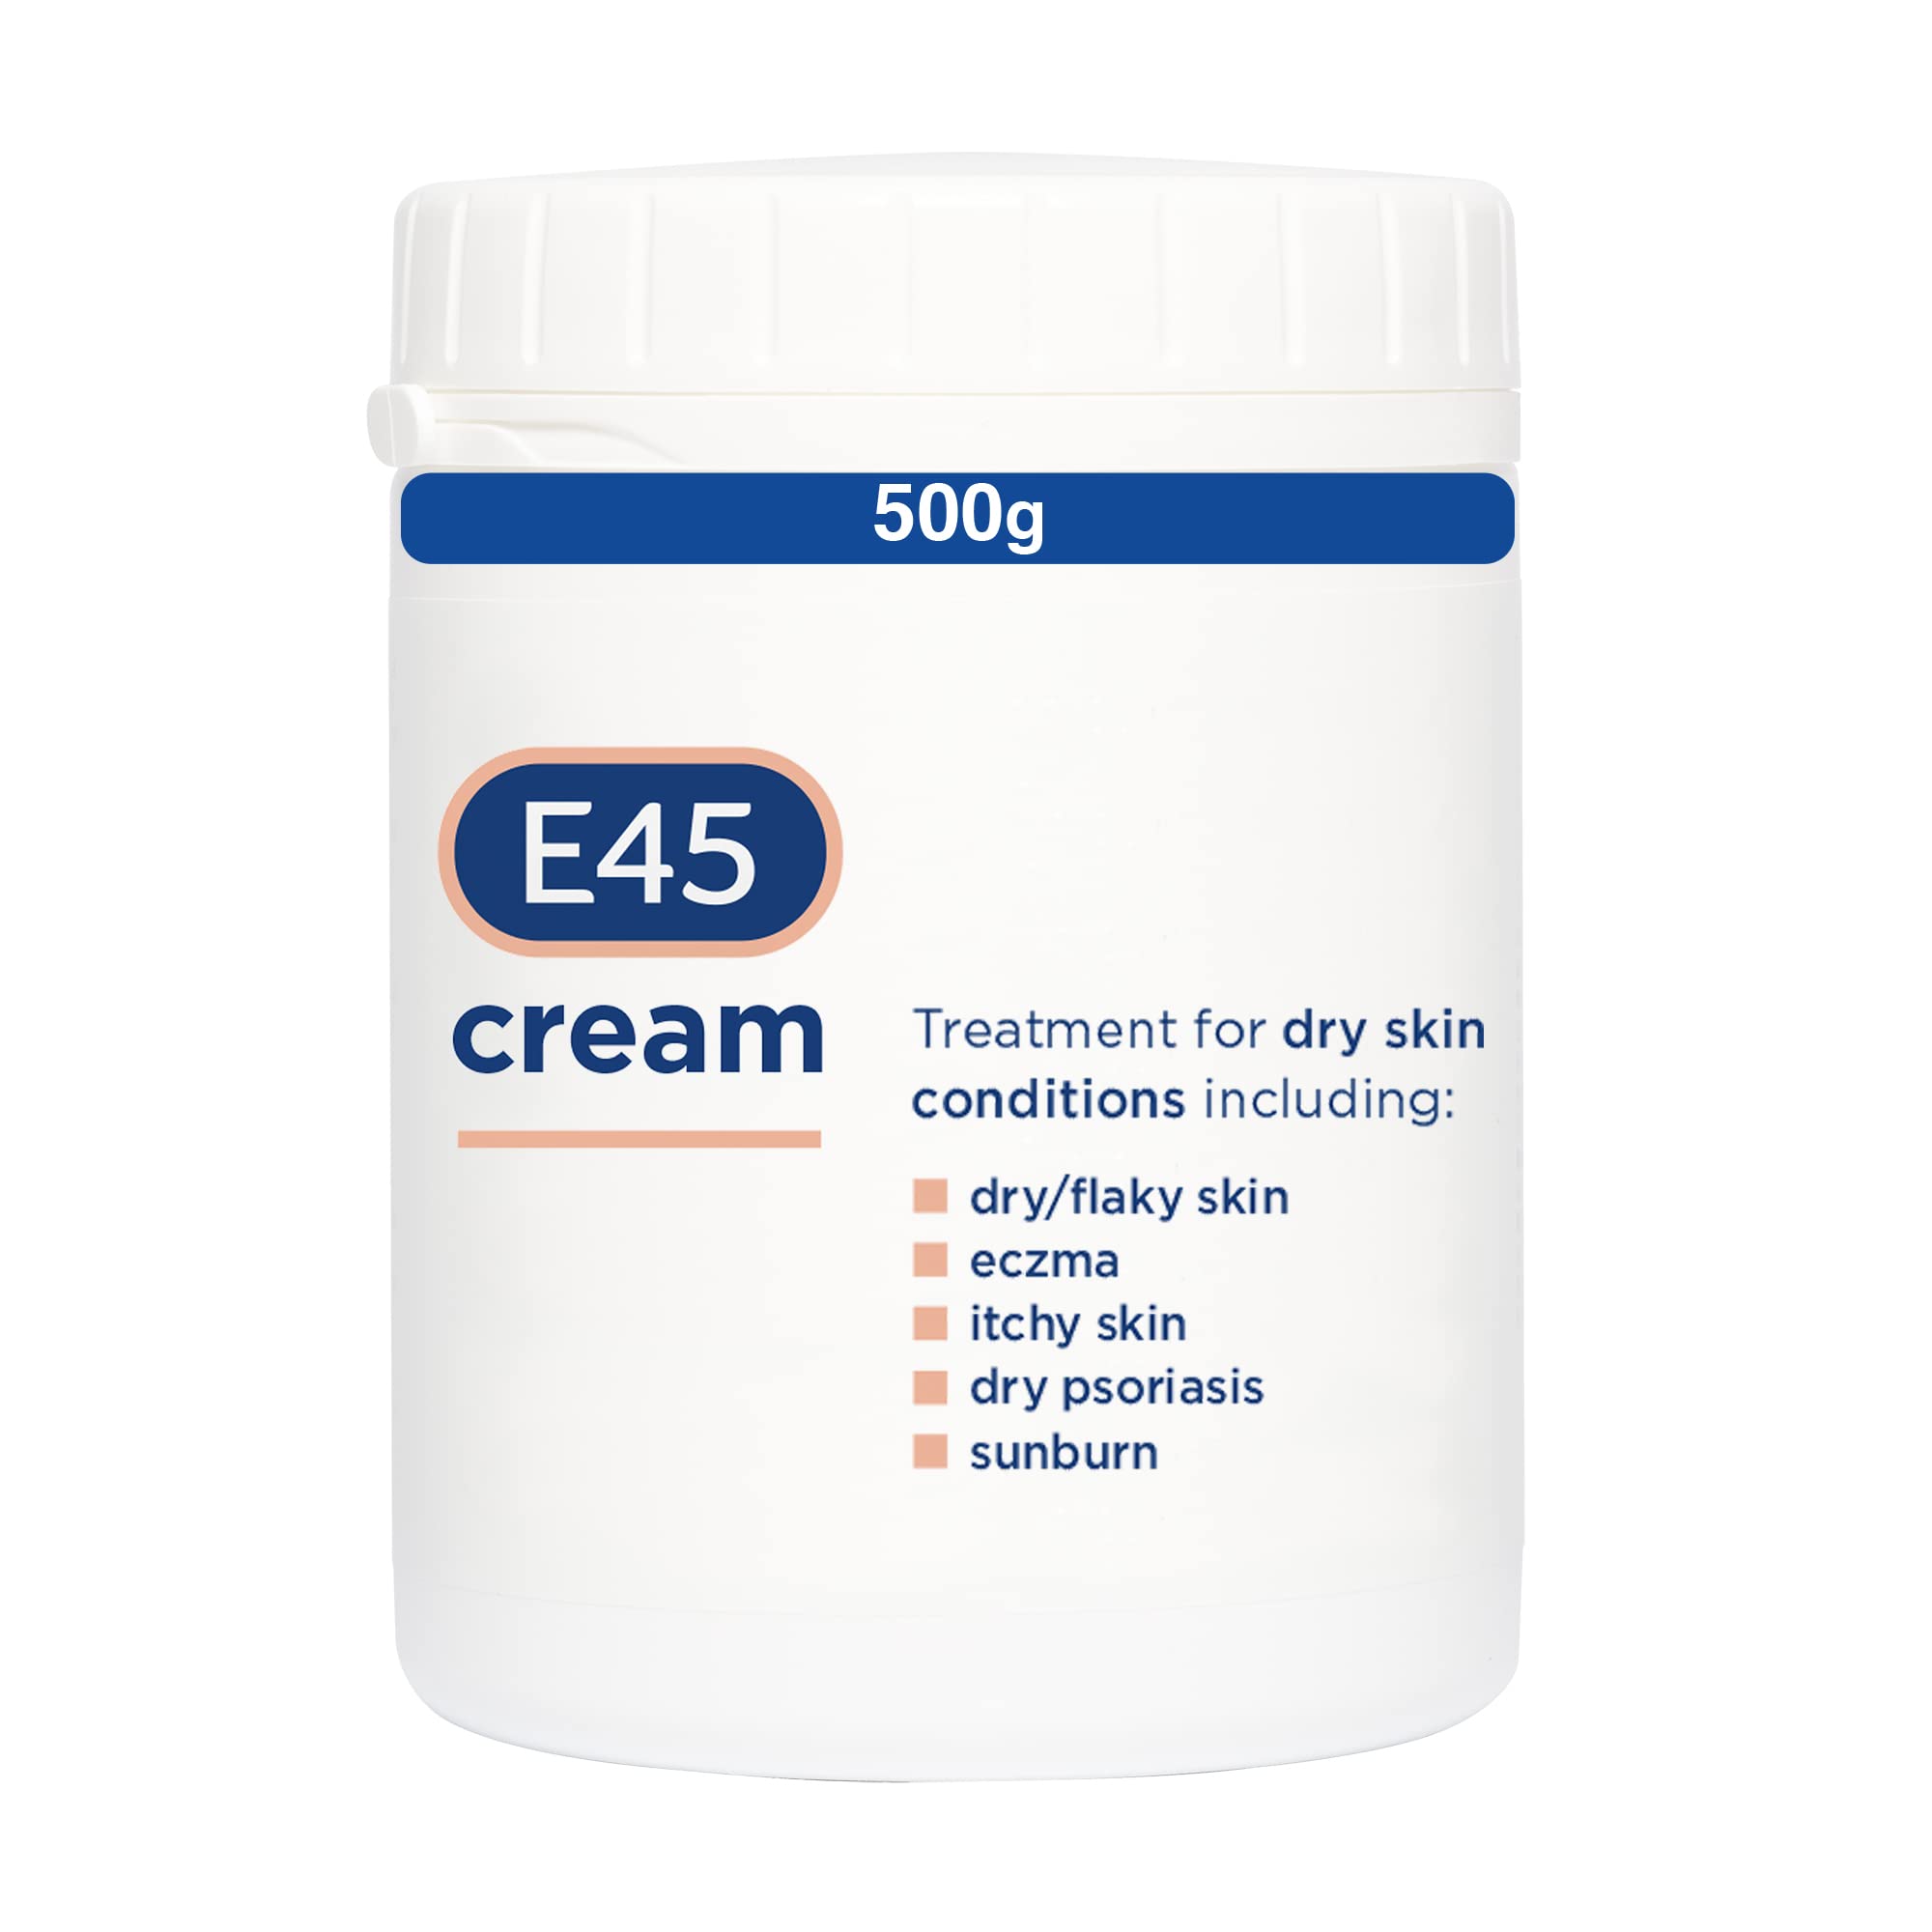 E45 Moisturiser Cream, body, face and hand cream for very dry skin, 500g Tub